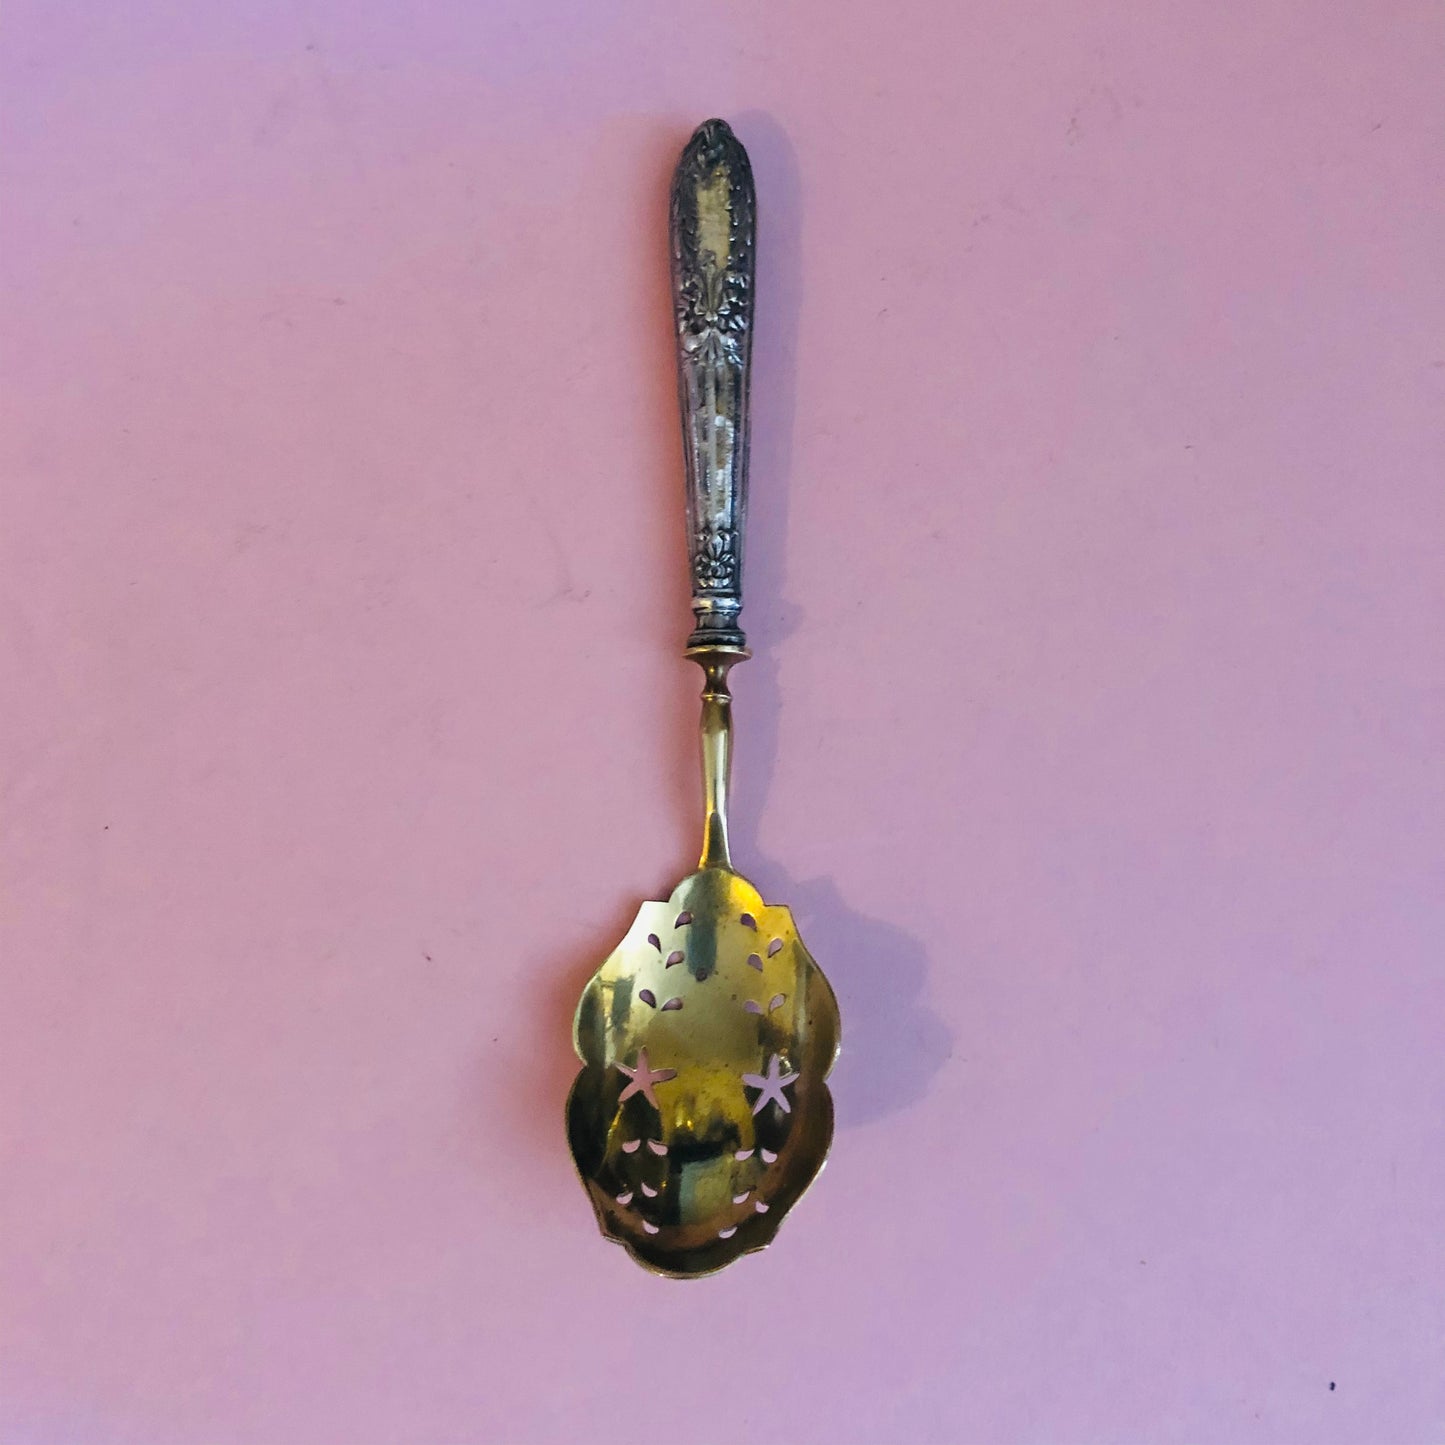 The Headhunter Tara - French Antique Silver Dessert Spoon